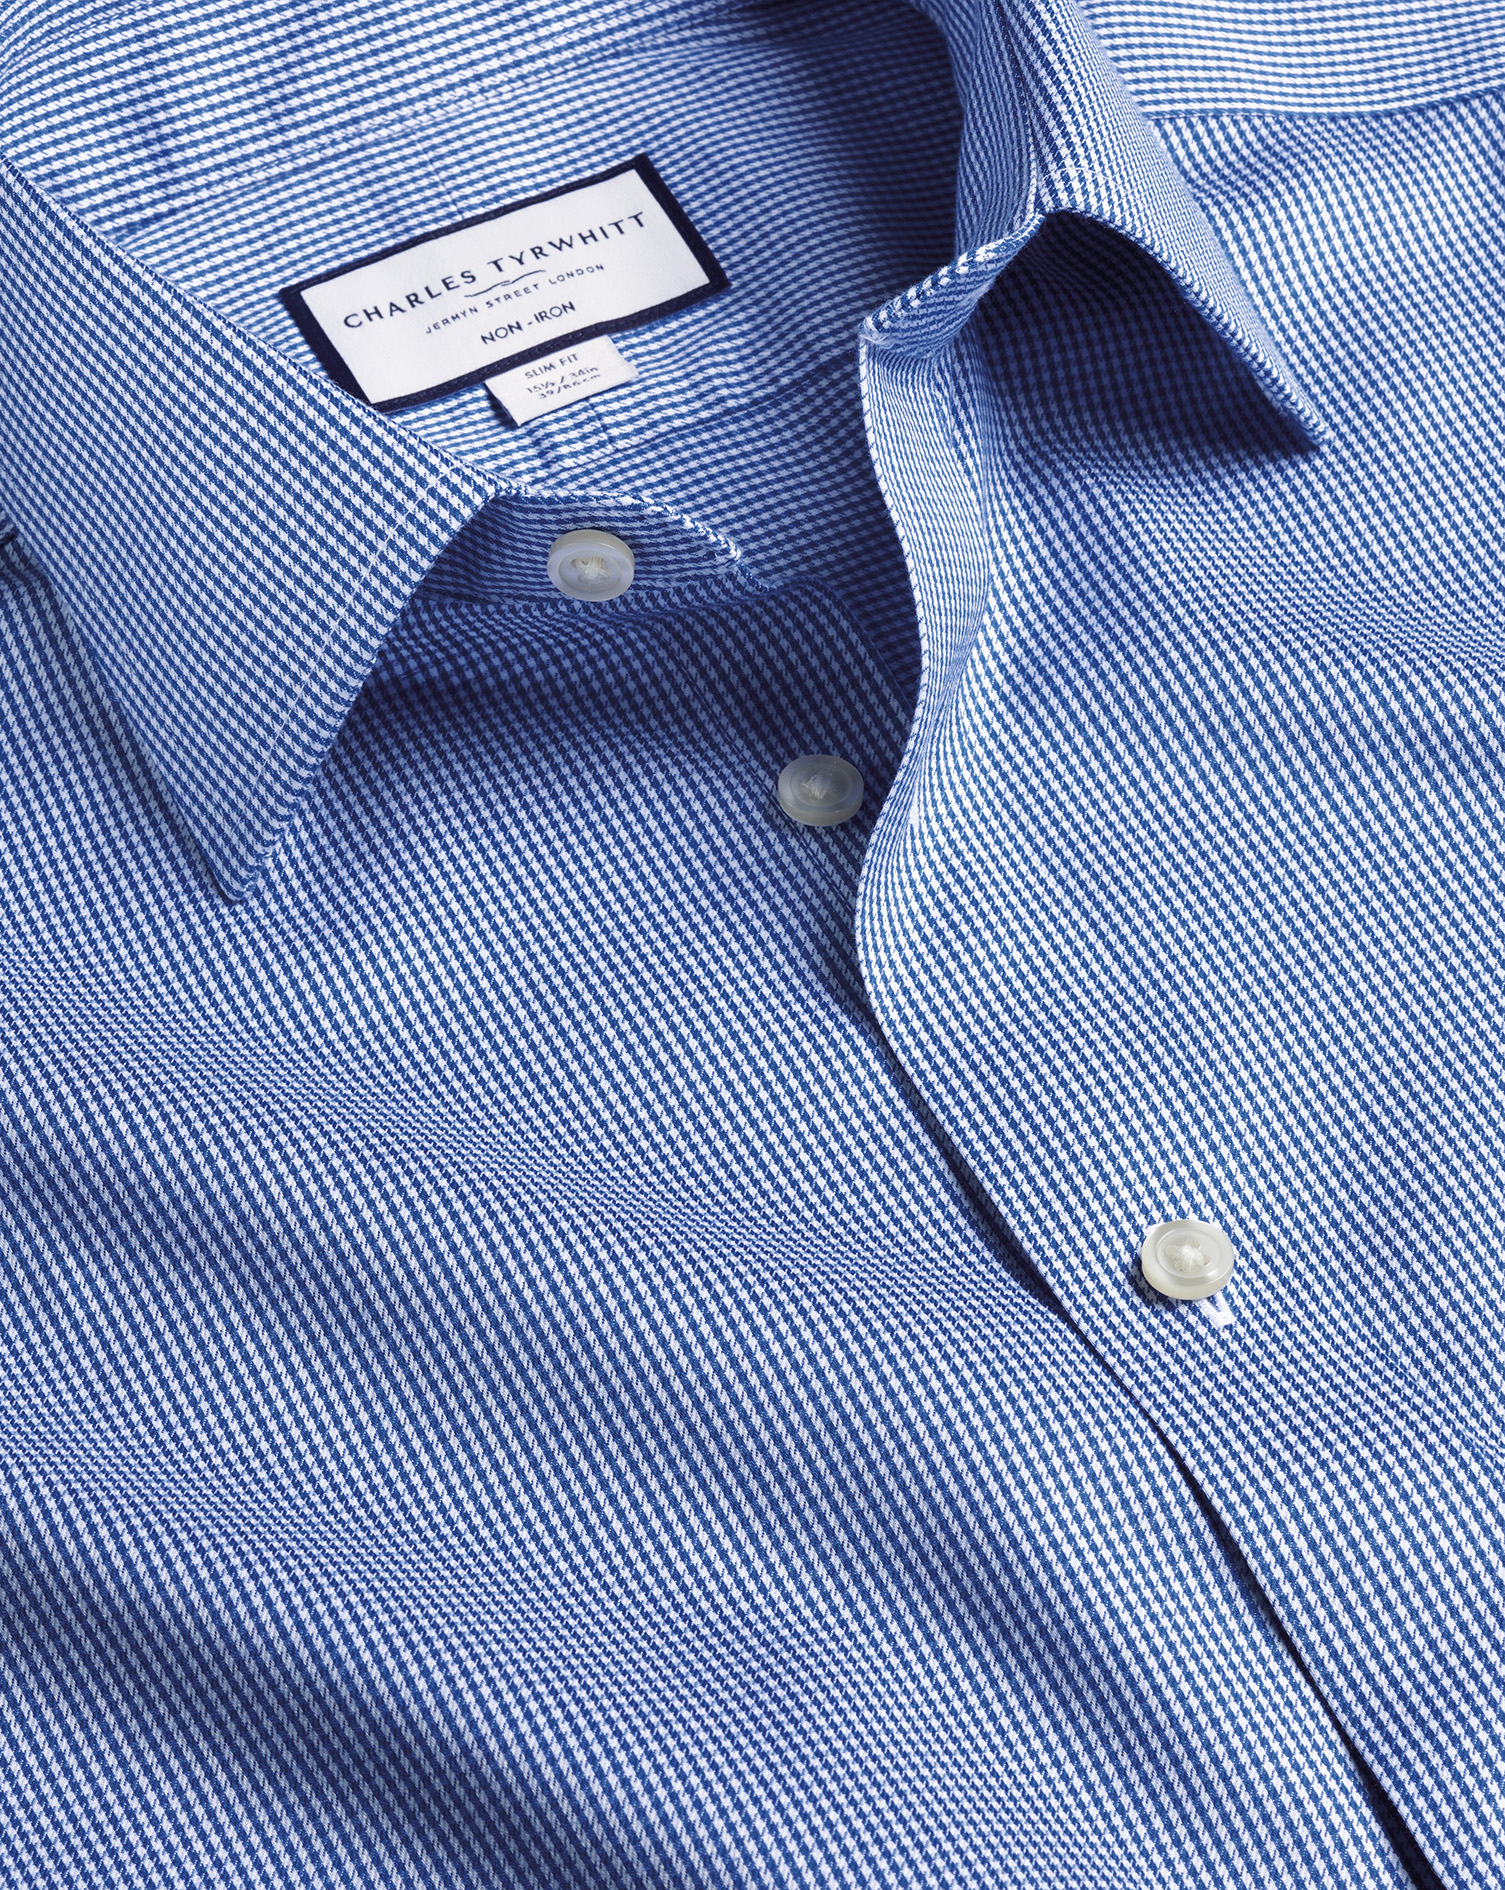 Men's Charles Tyrwhitt Non-Iron Puppytooth Dress Shirt - Royal Blue Single Cuff Size Medium Cotton
